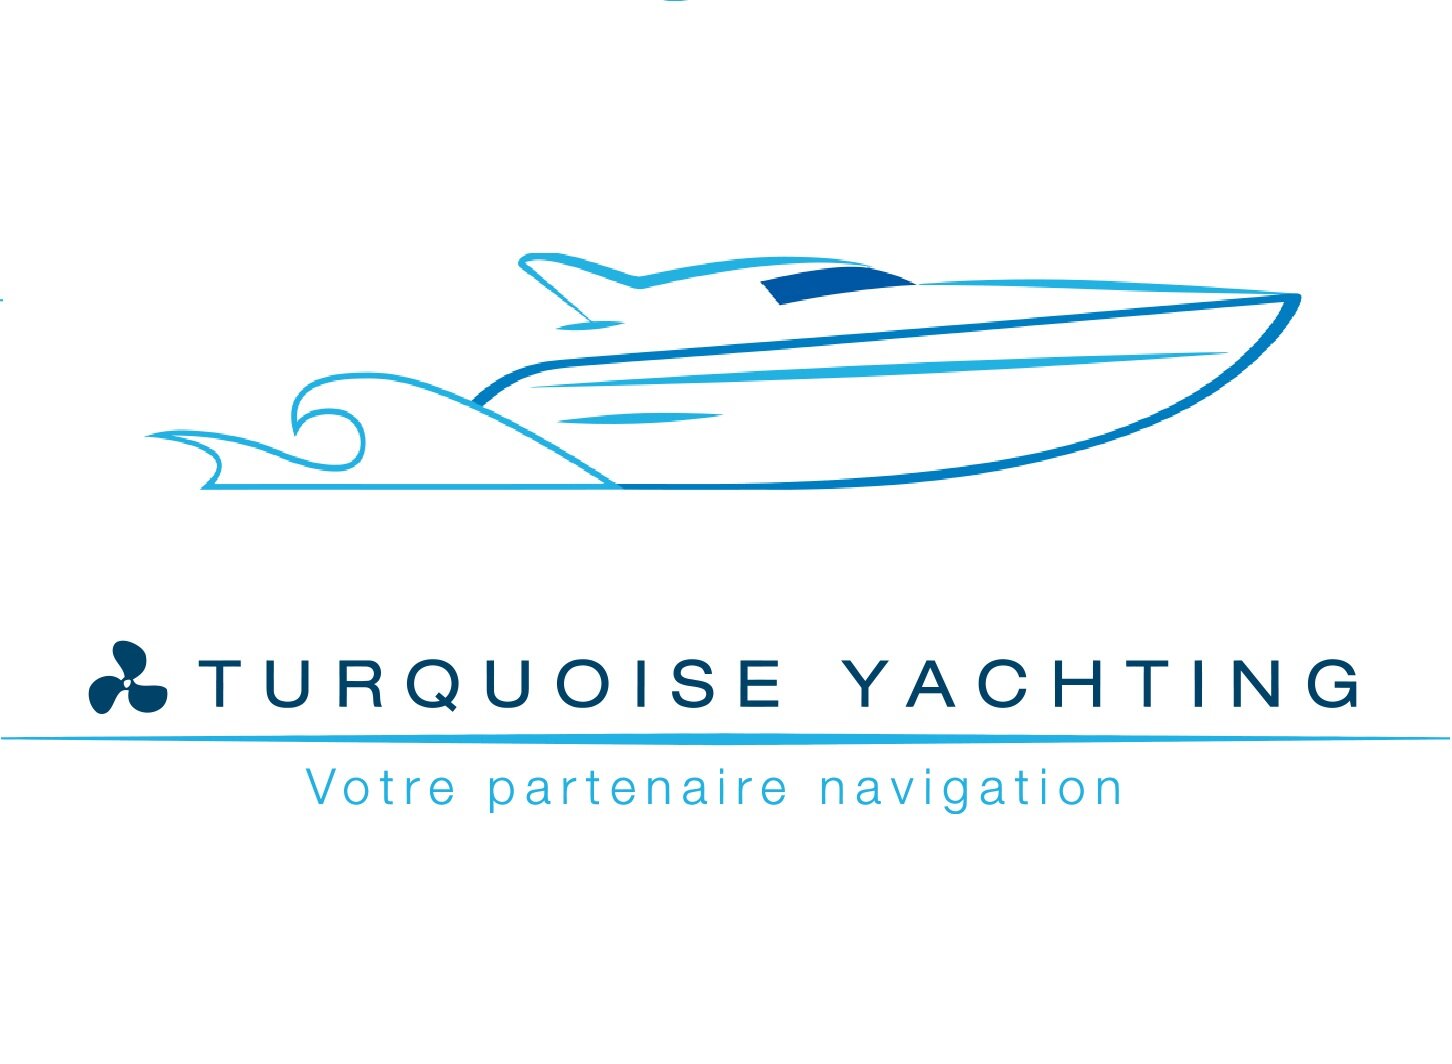 Turquoise Yachting